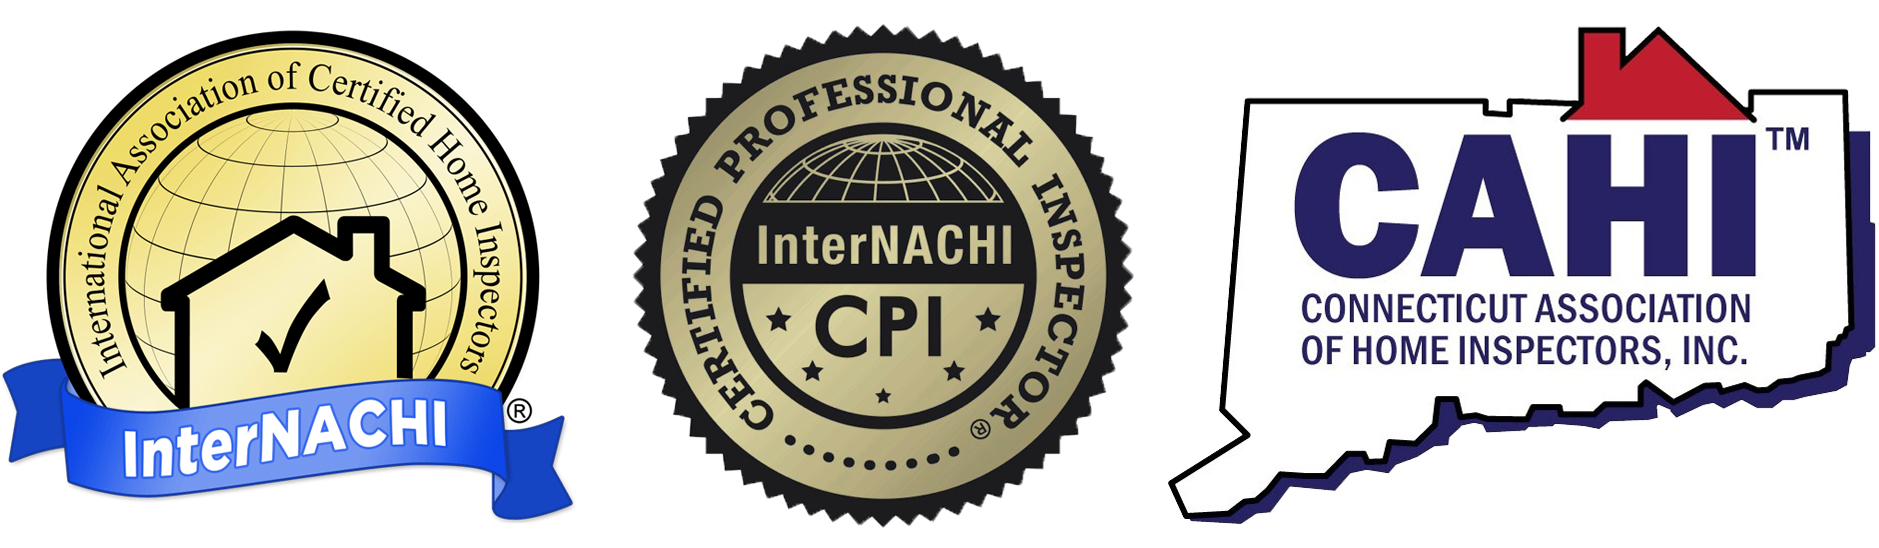 International Association of Certified Home Inspectors Member logo, InterNACHI Certified Professional Inspector (CPI) logo, CAHI Connecticut Association of Home Inspectors logo